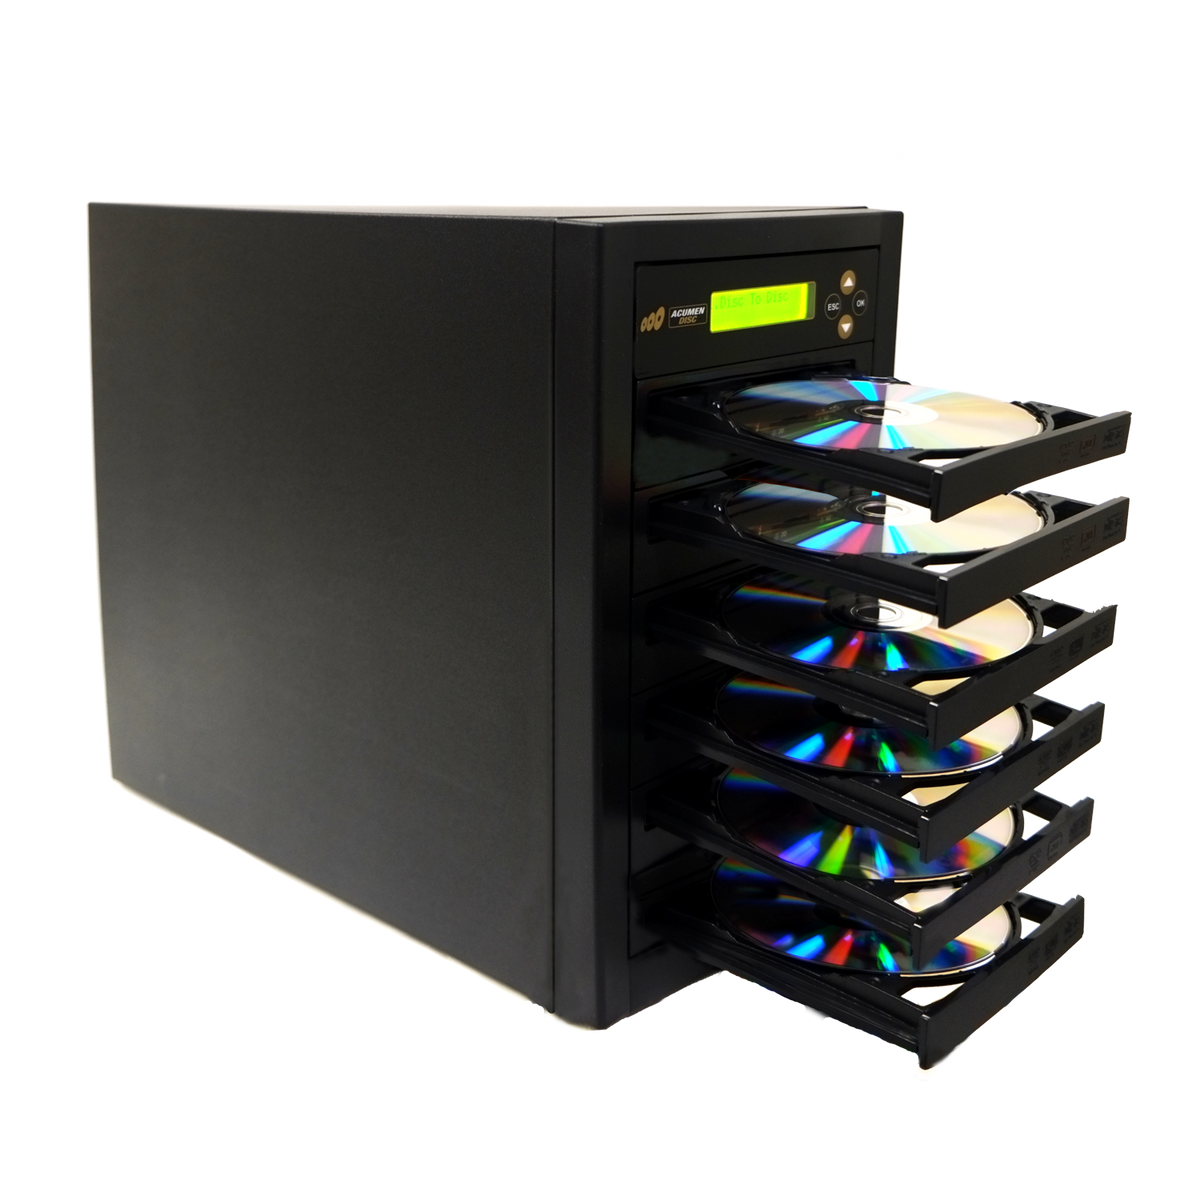 Acumen Disc 1 to 5 DVD CD Duplicator - Multiple Discs Copier Tower 